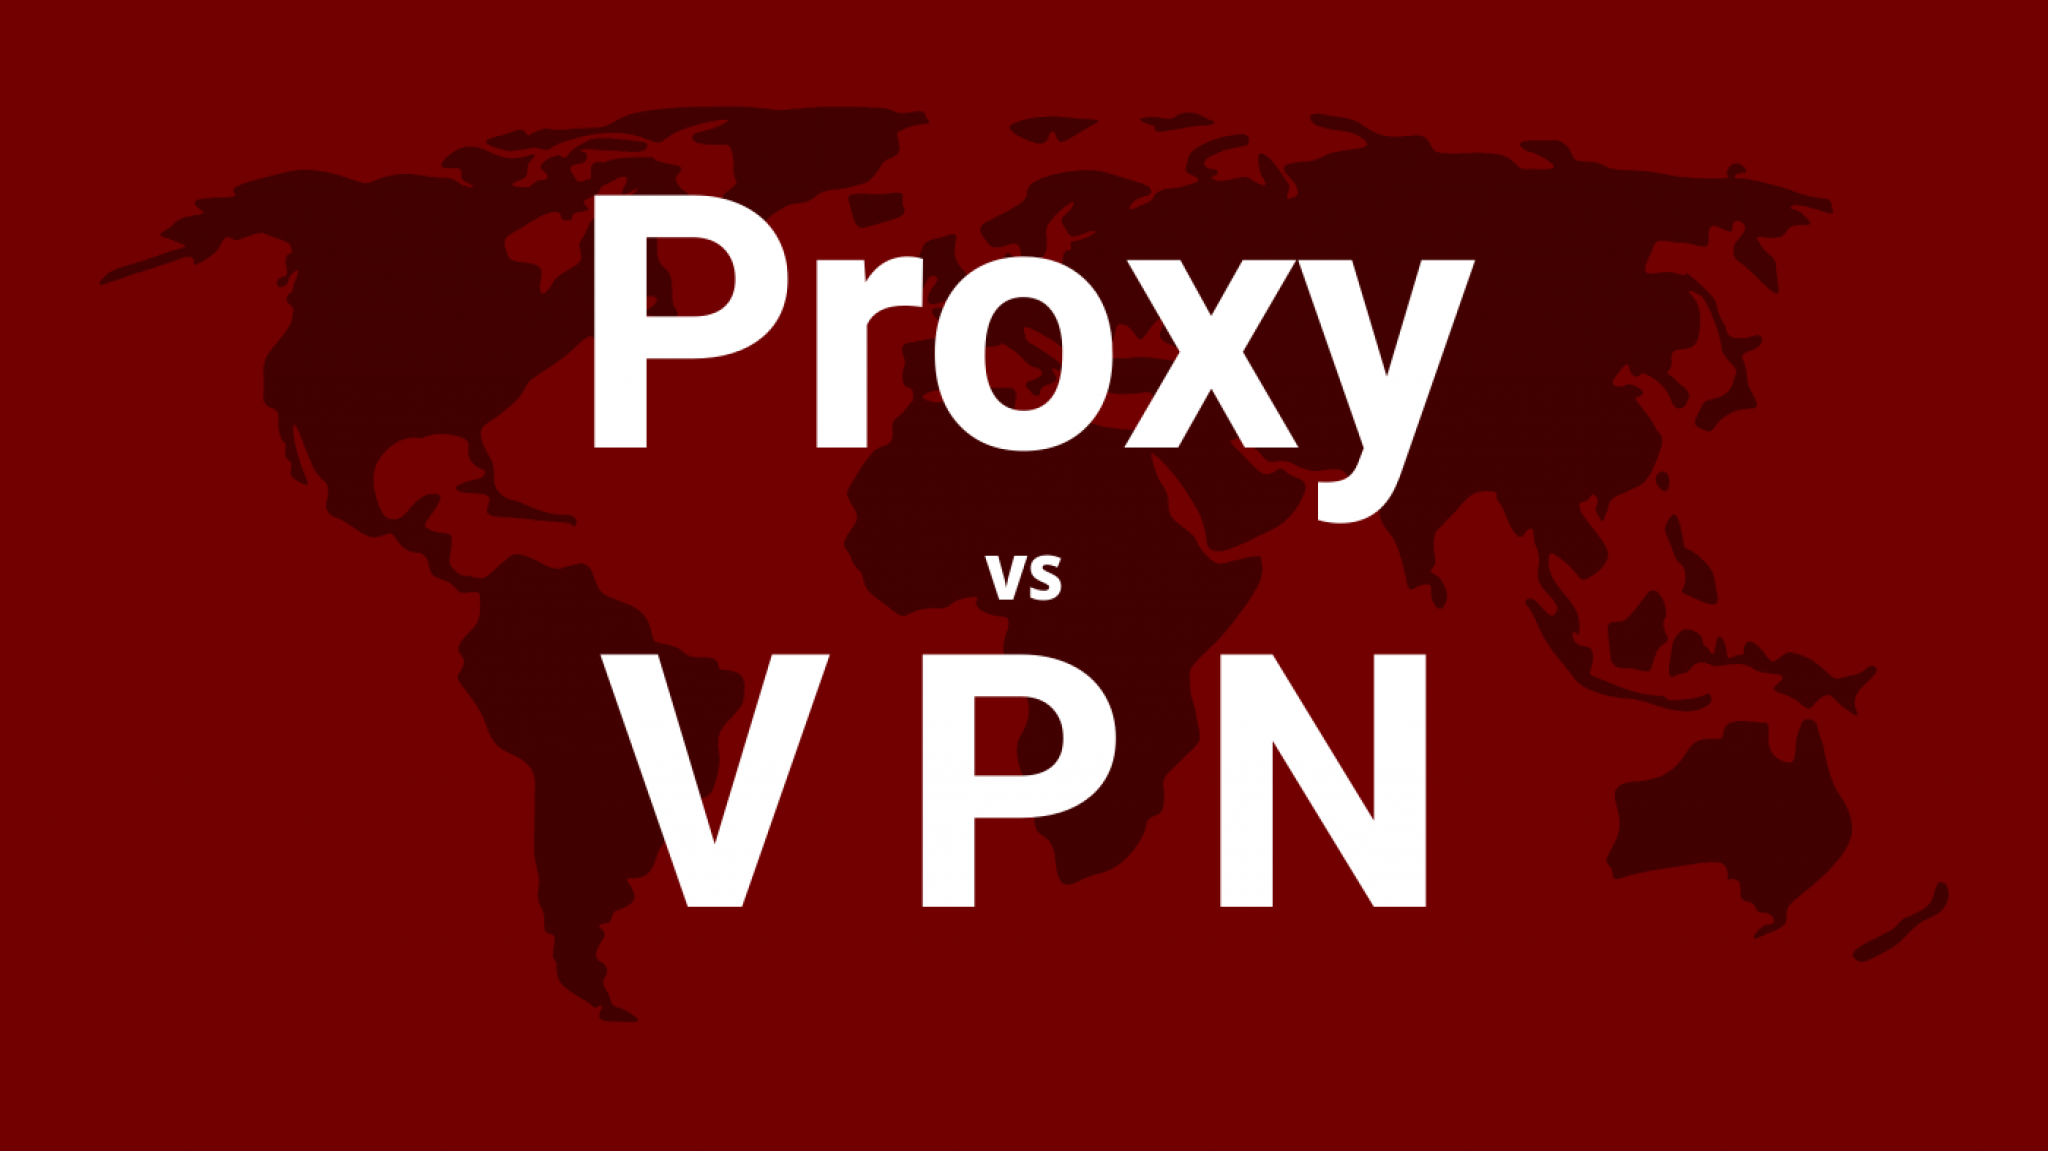 proxy vs vpn for torrents